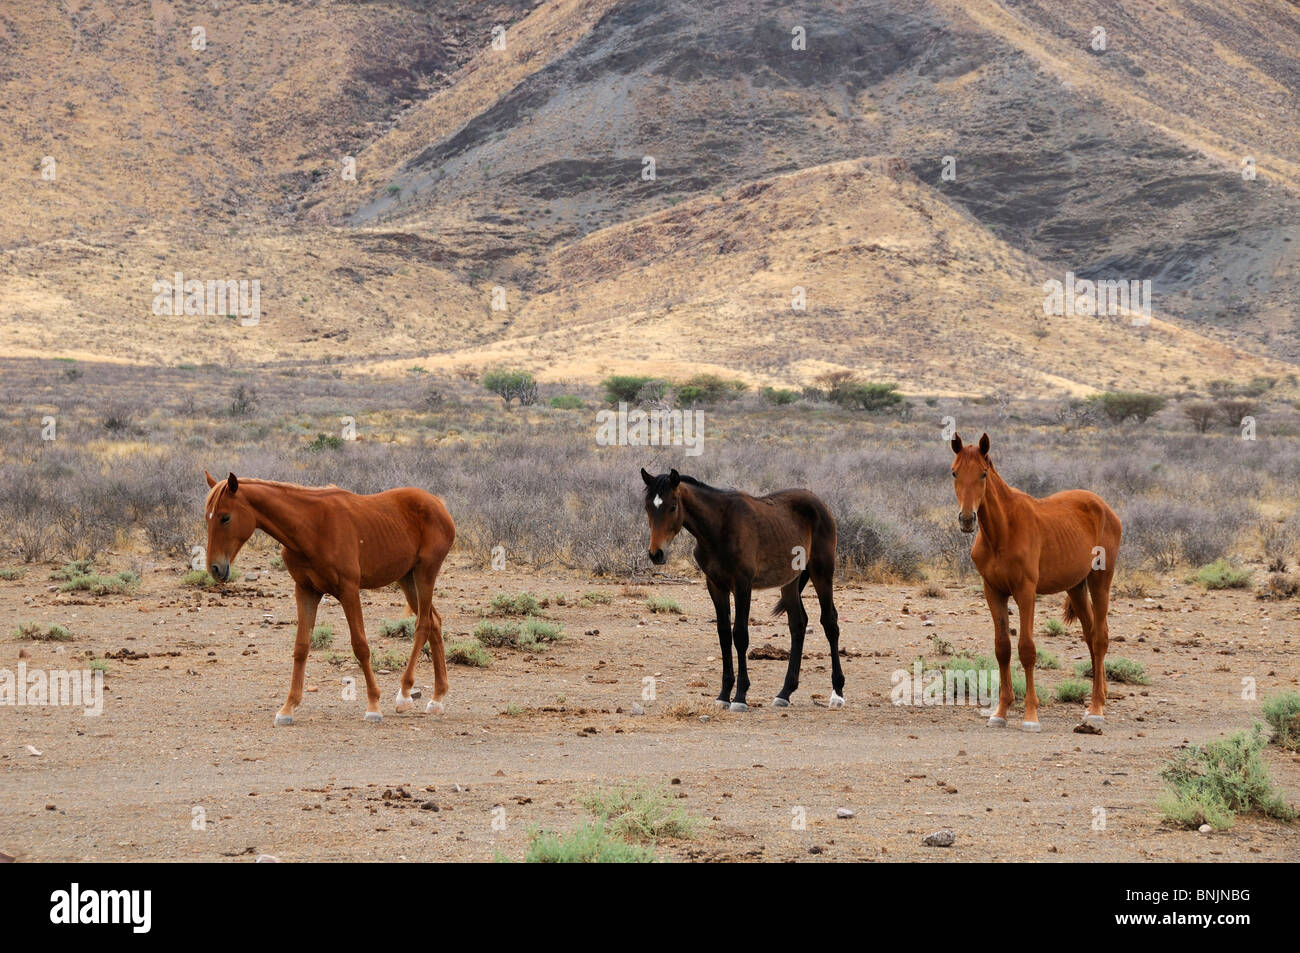 Horses Buellsport Hardap Region Namibia Africa Travel Nature animals Stock Photo